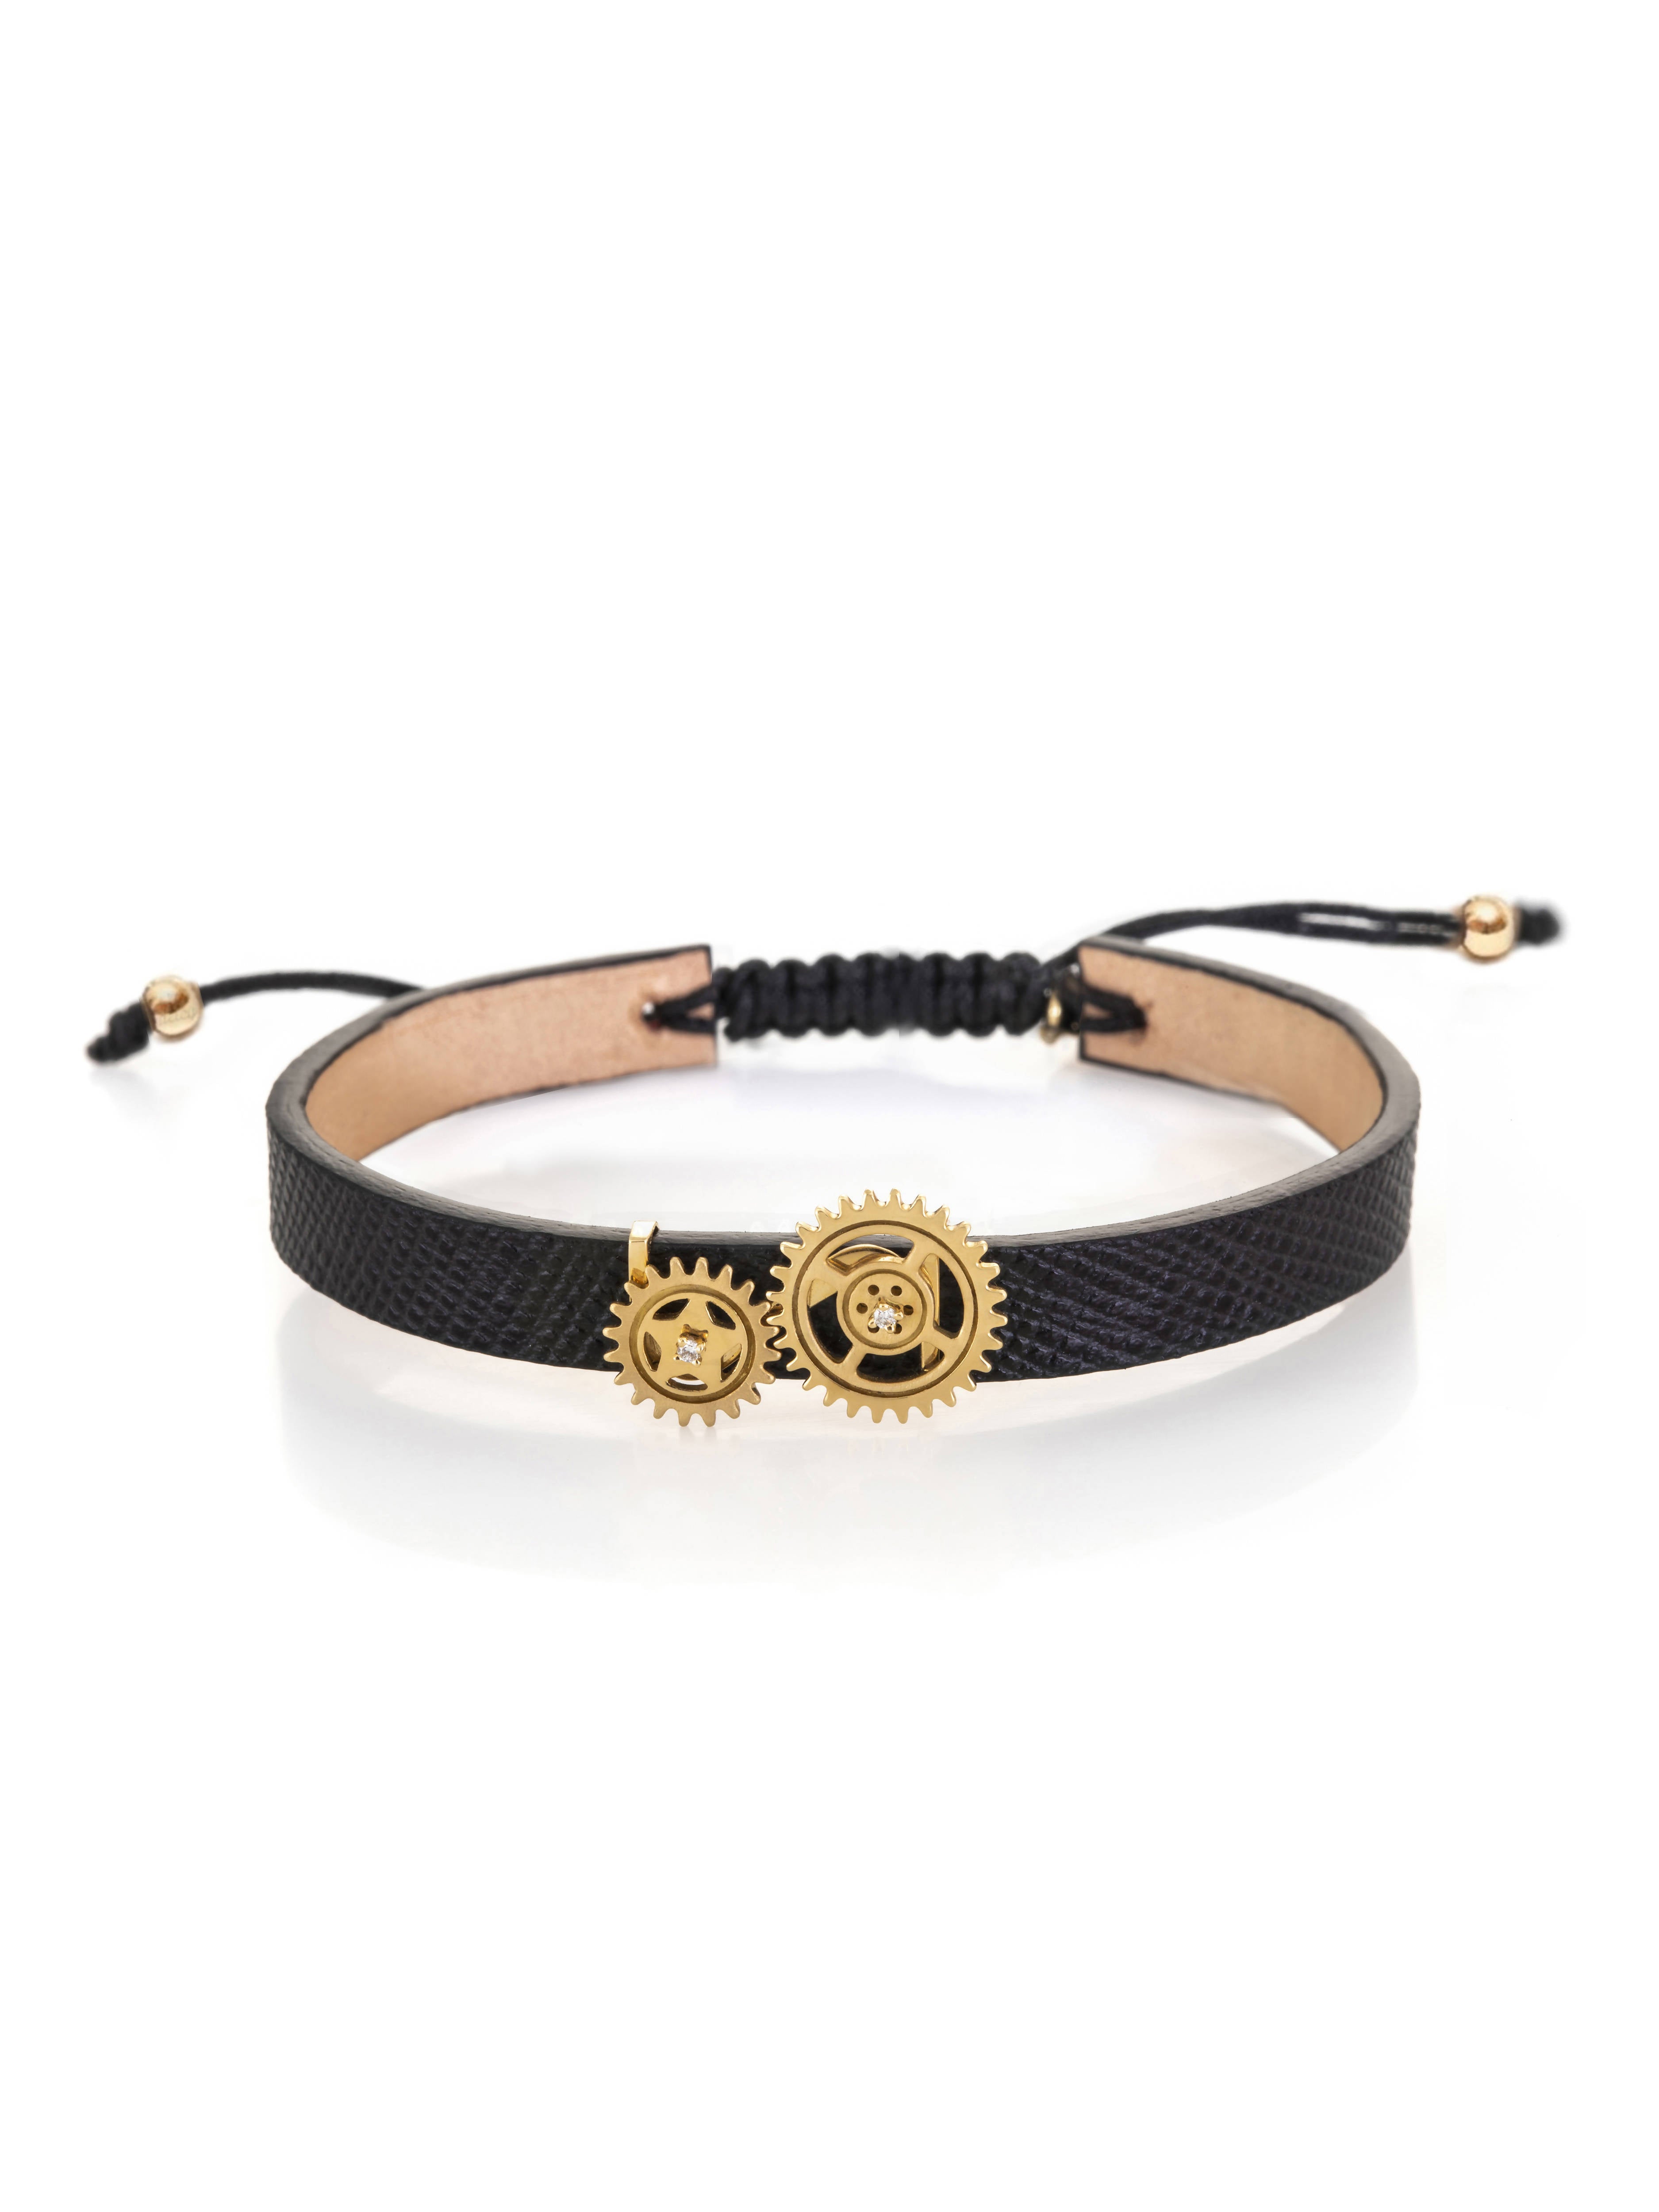 gold-duo-gear-leather-bracelet-soft buckle- By Delcy